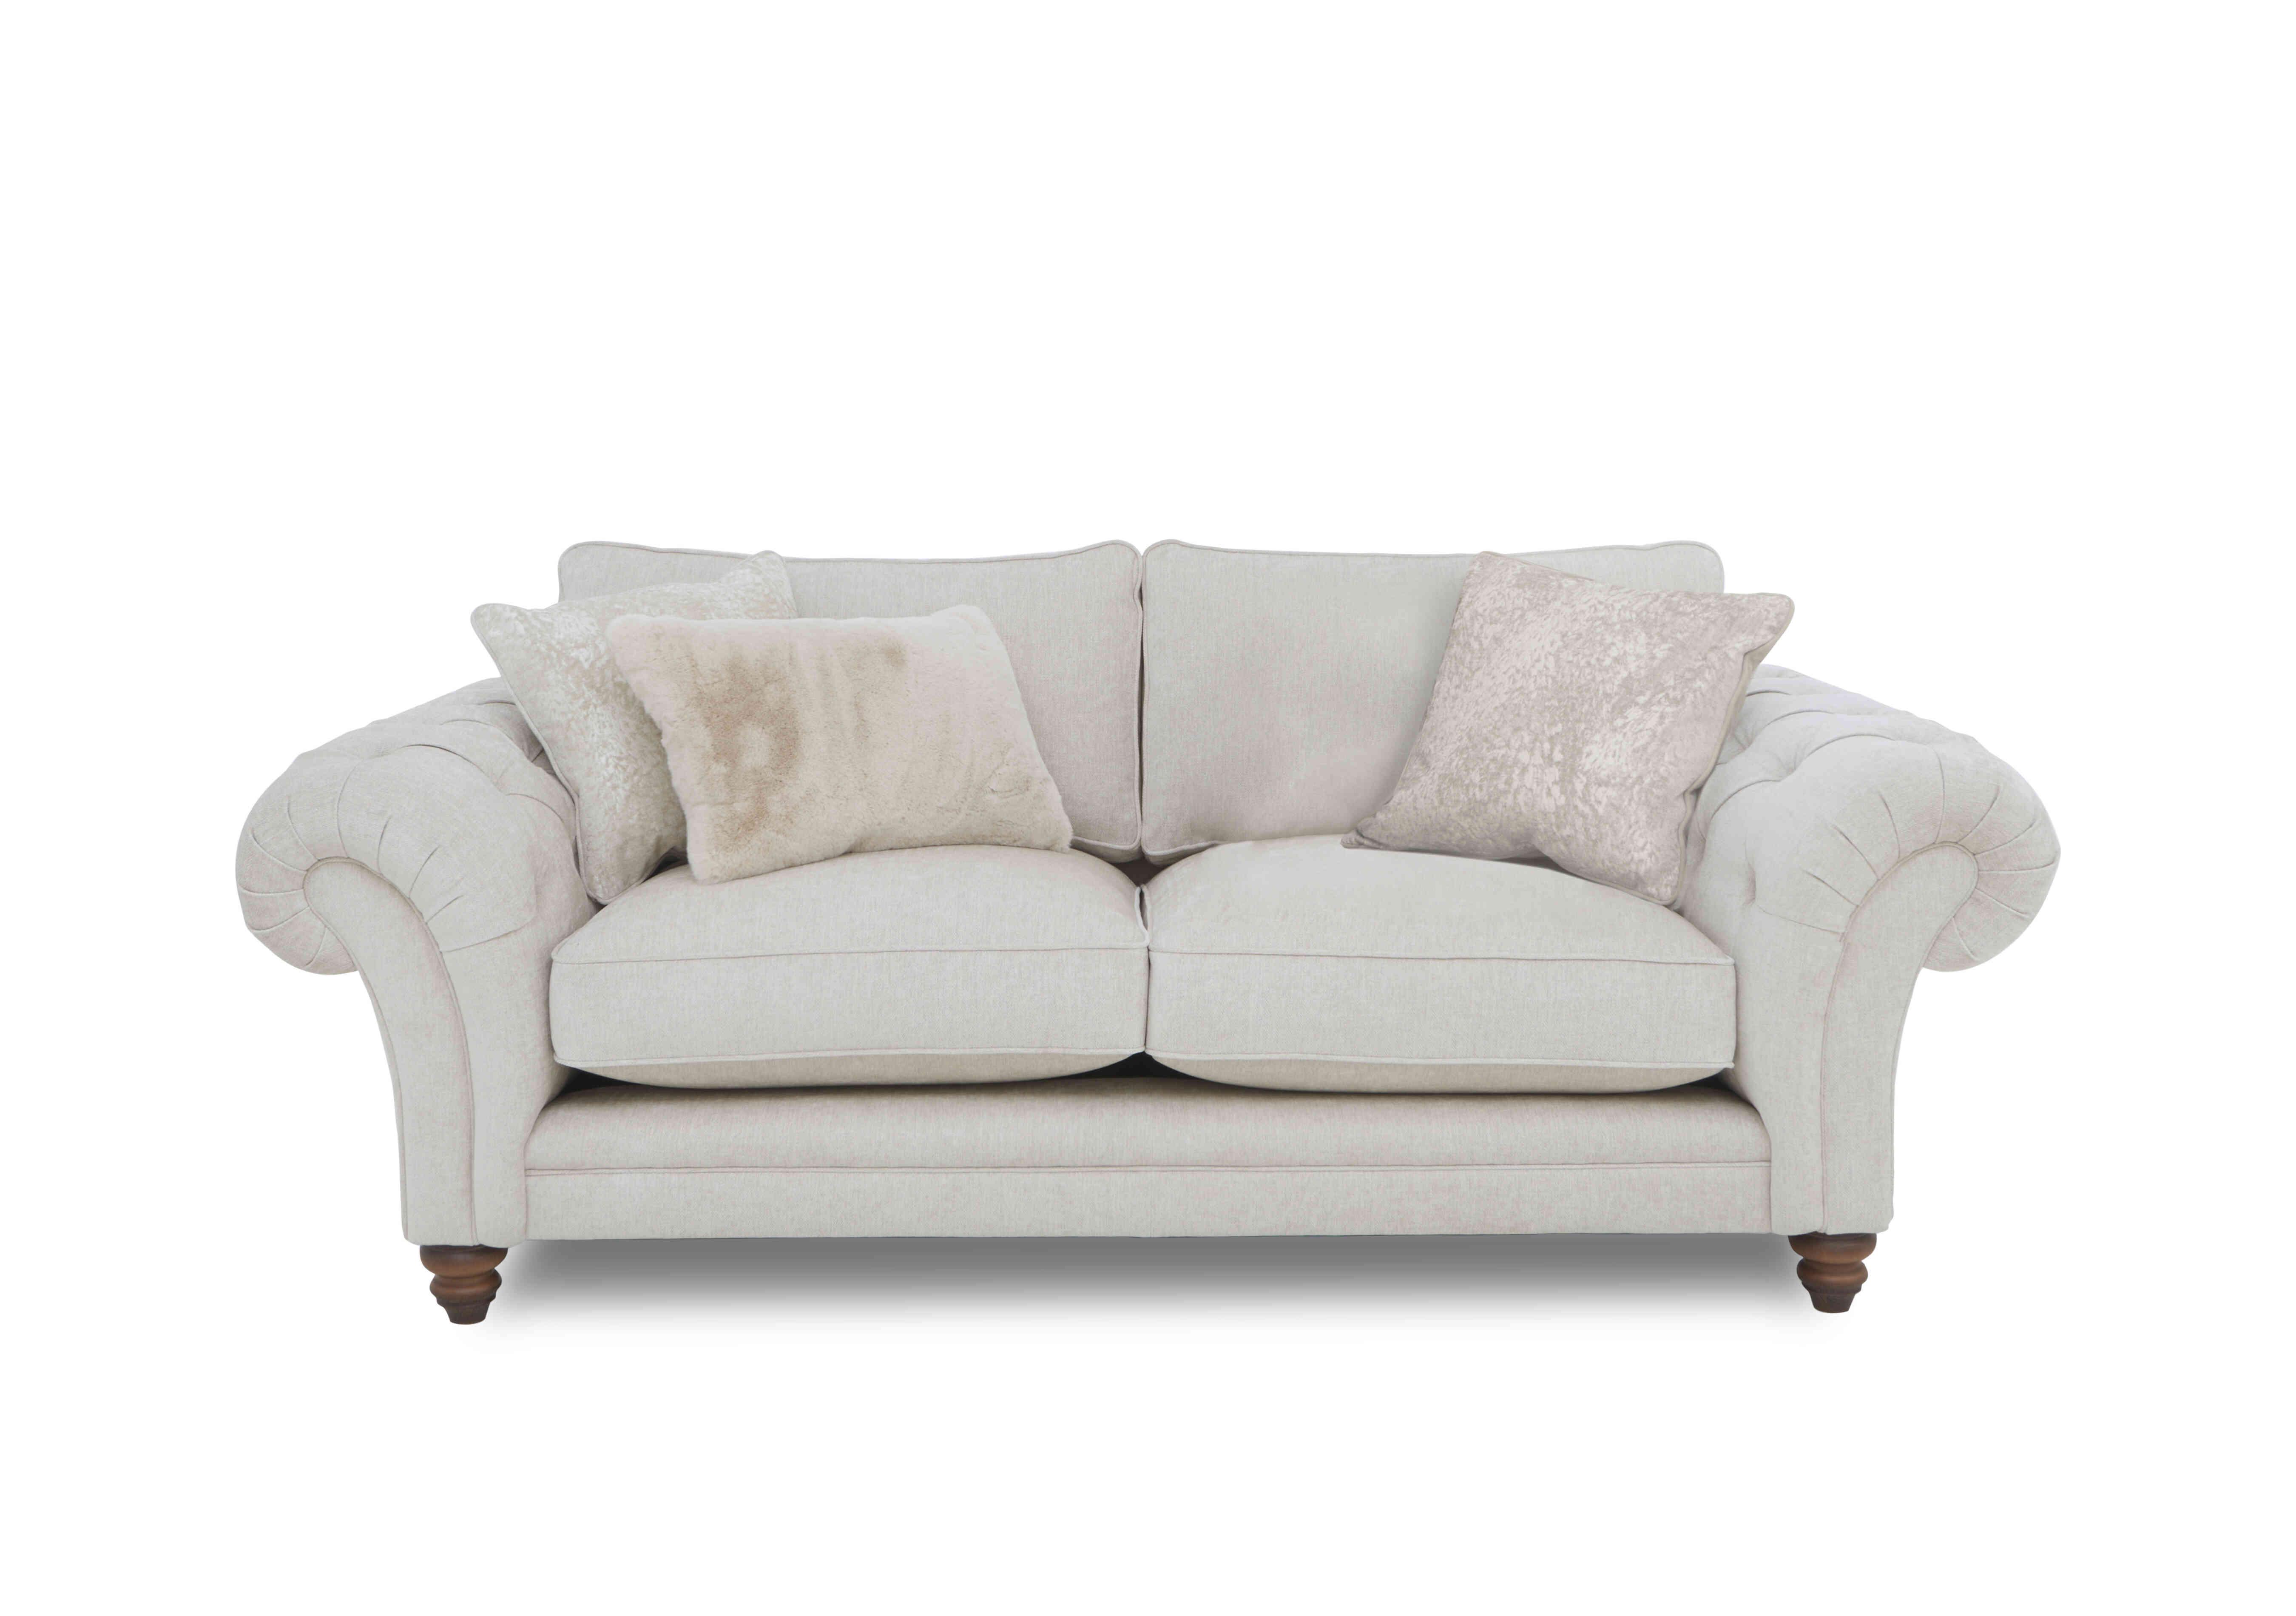 Blenheim 3 Seater Classic Back Sofa in Darwin Ivory Wf on Furniture Village